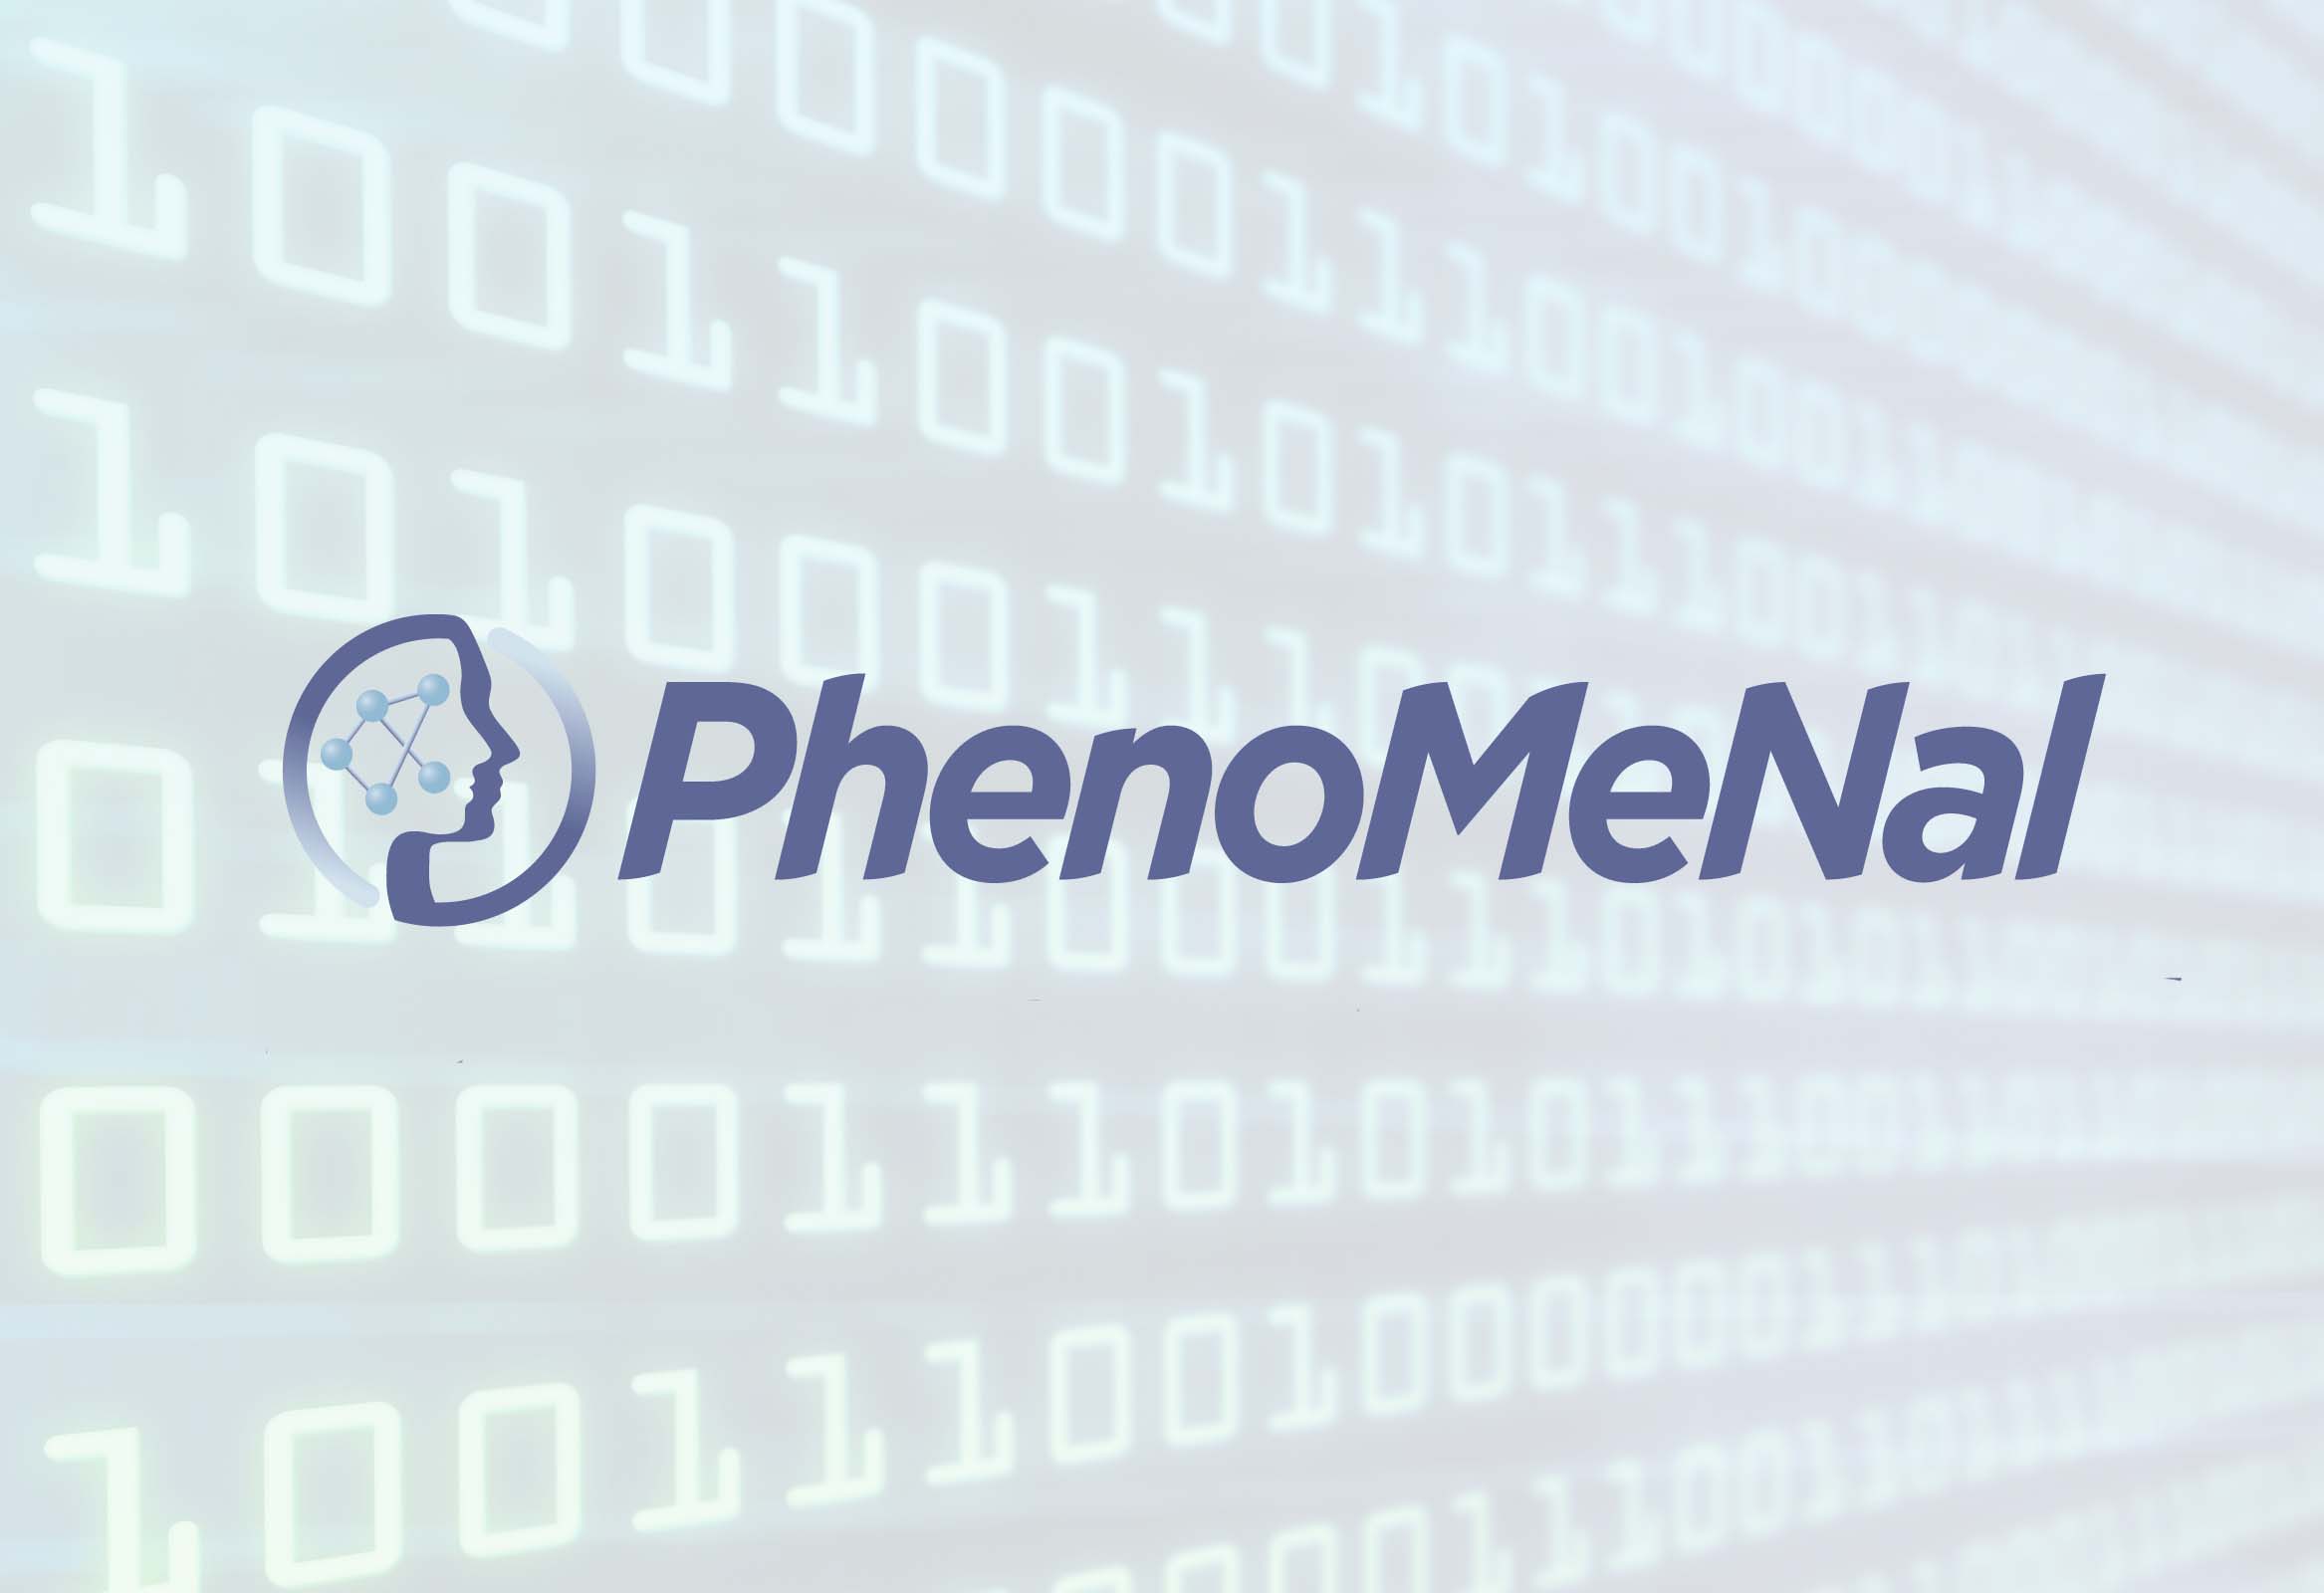 PhenoMeNal logo on binary data stream